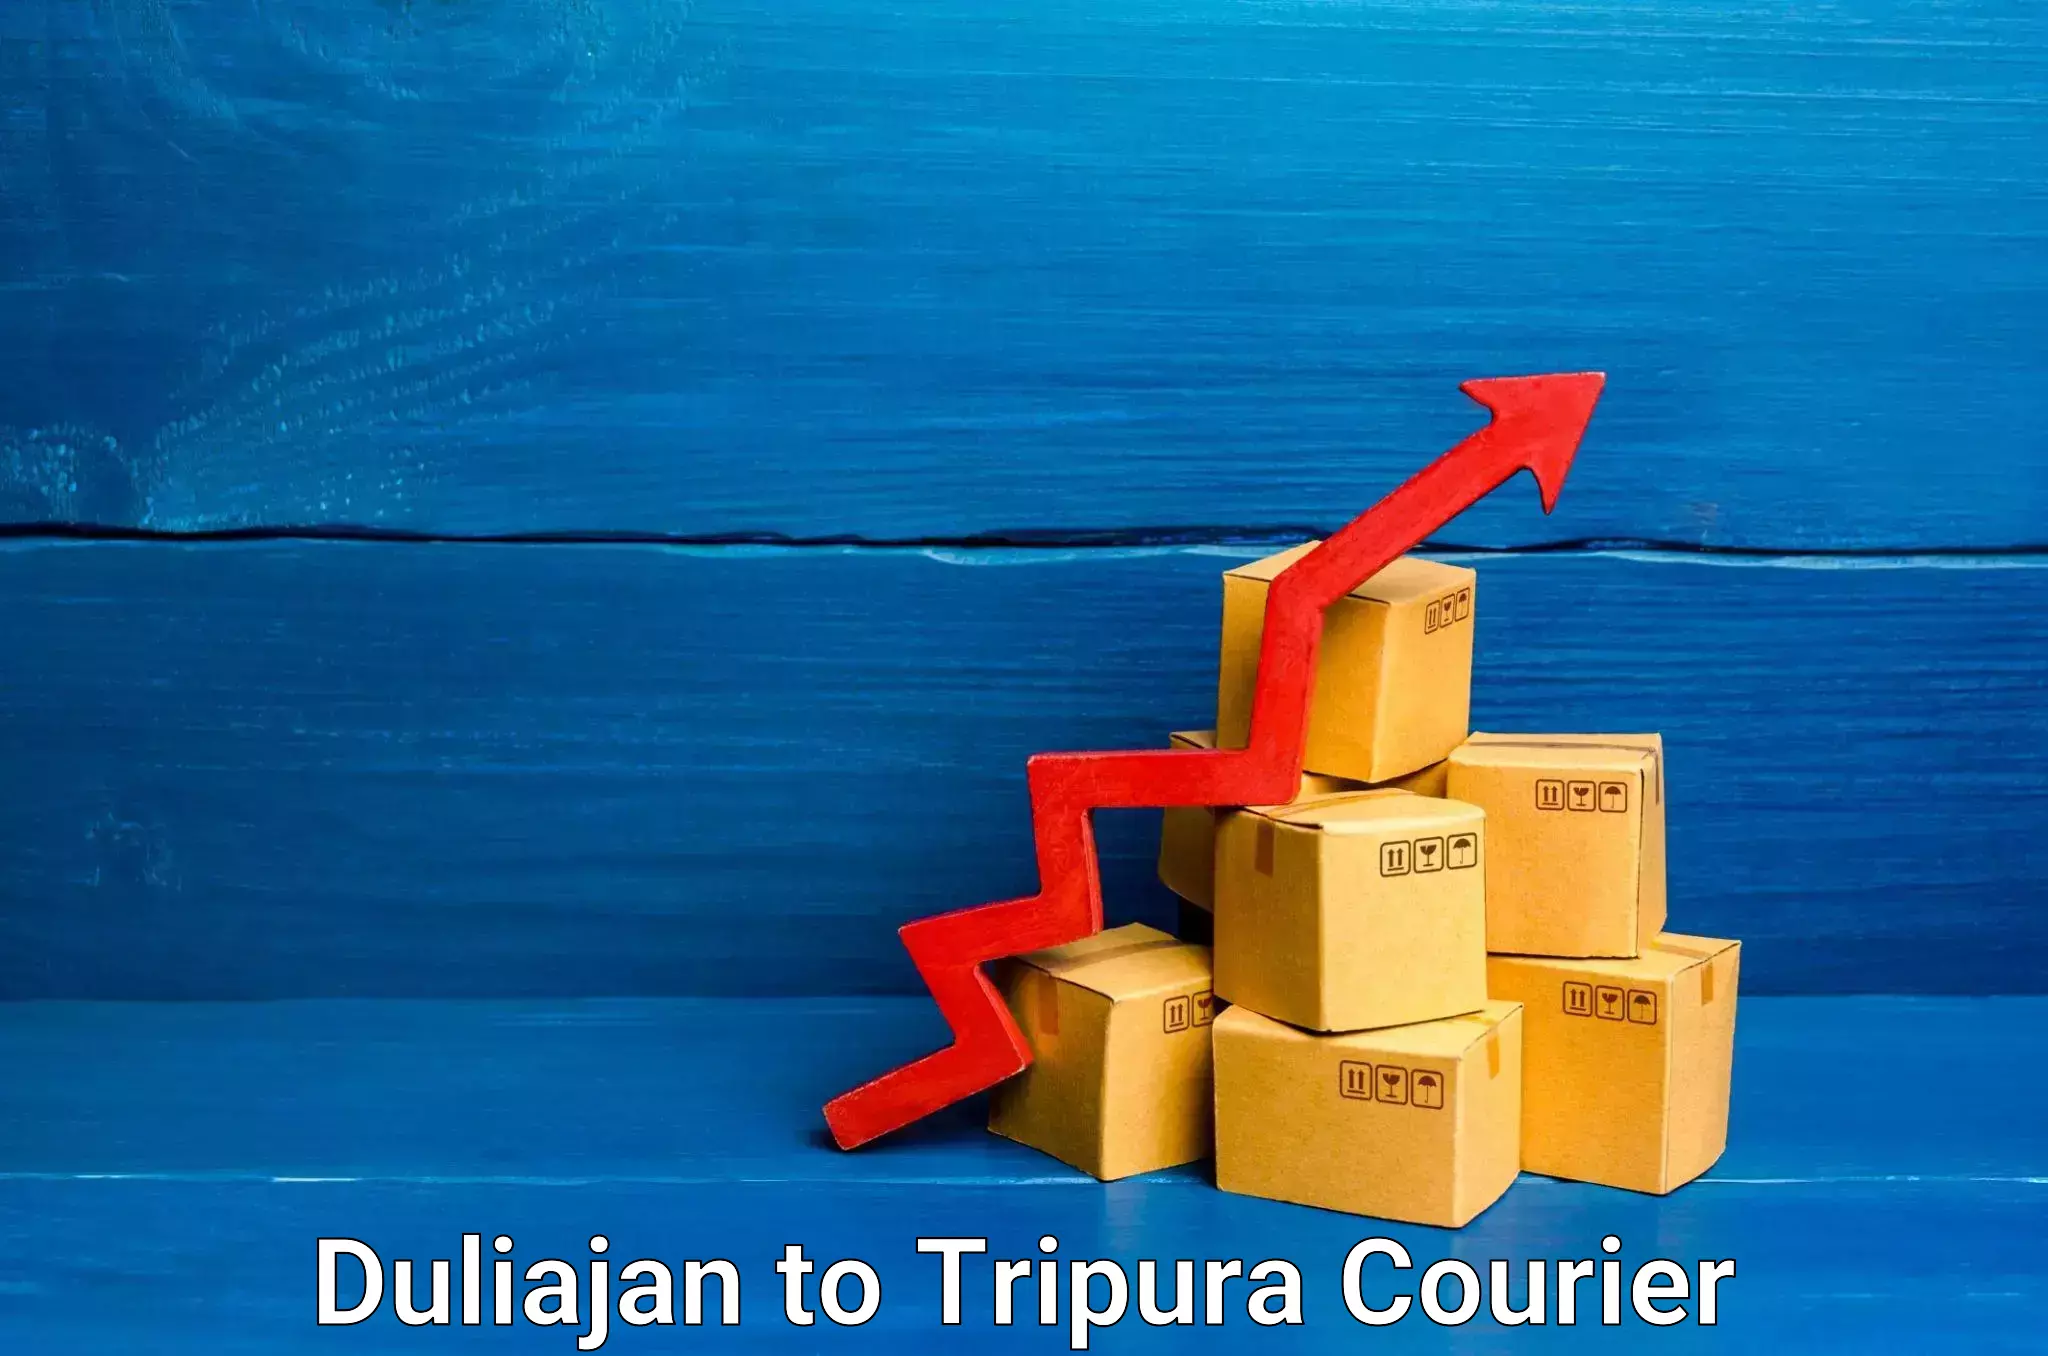 Quick dispatch service Duliajan to Agartala